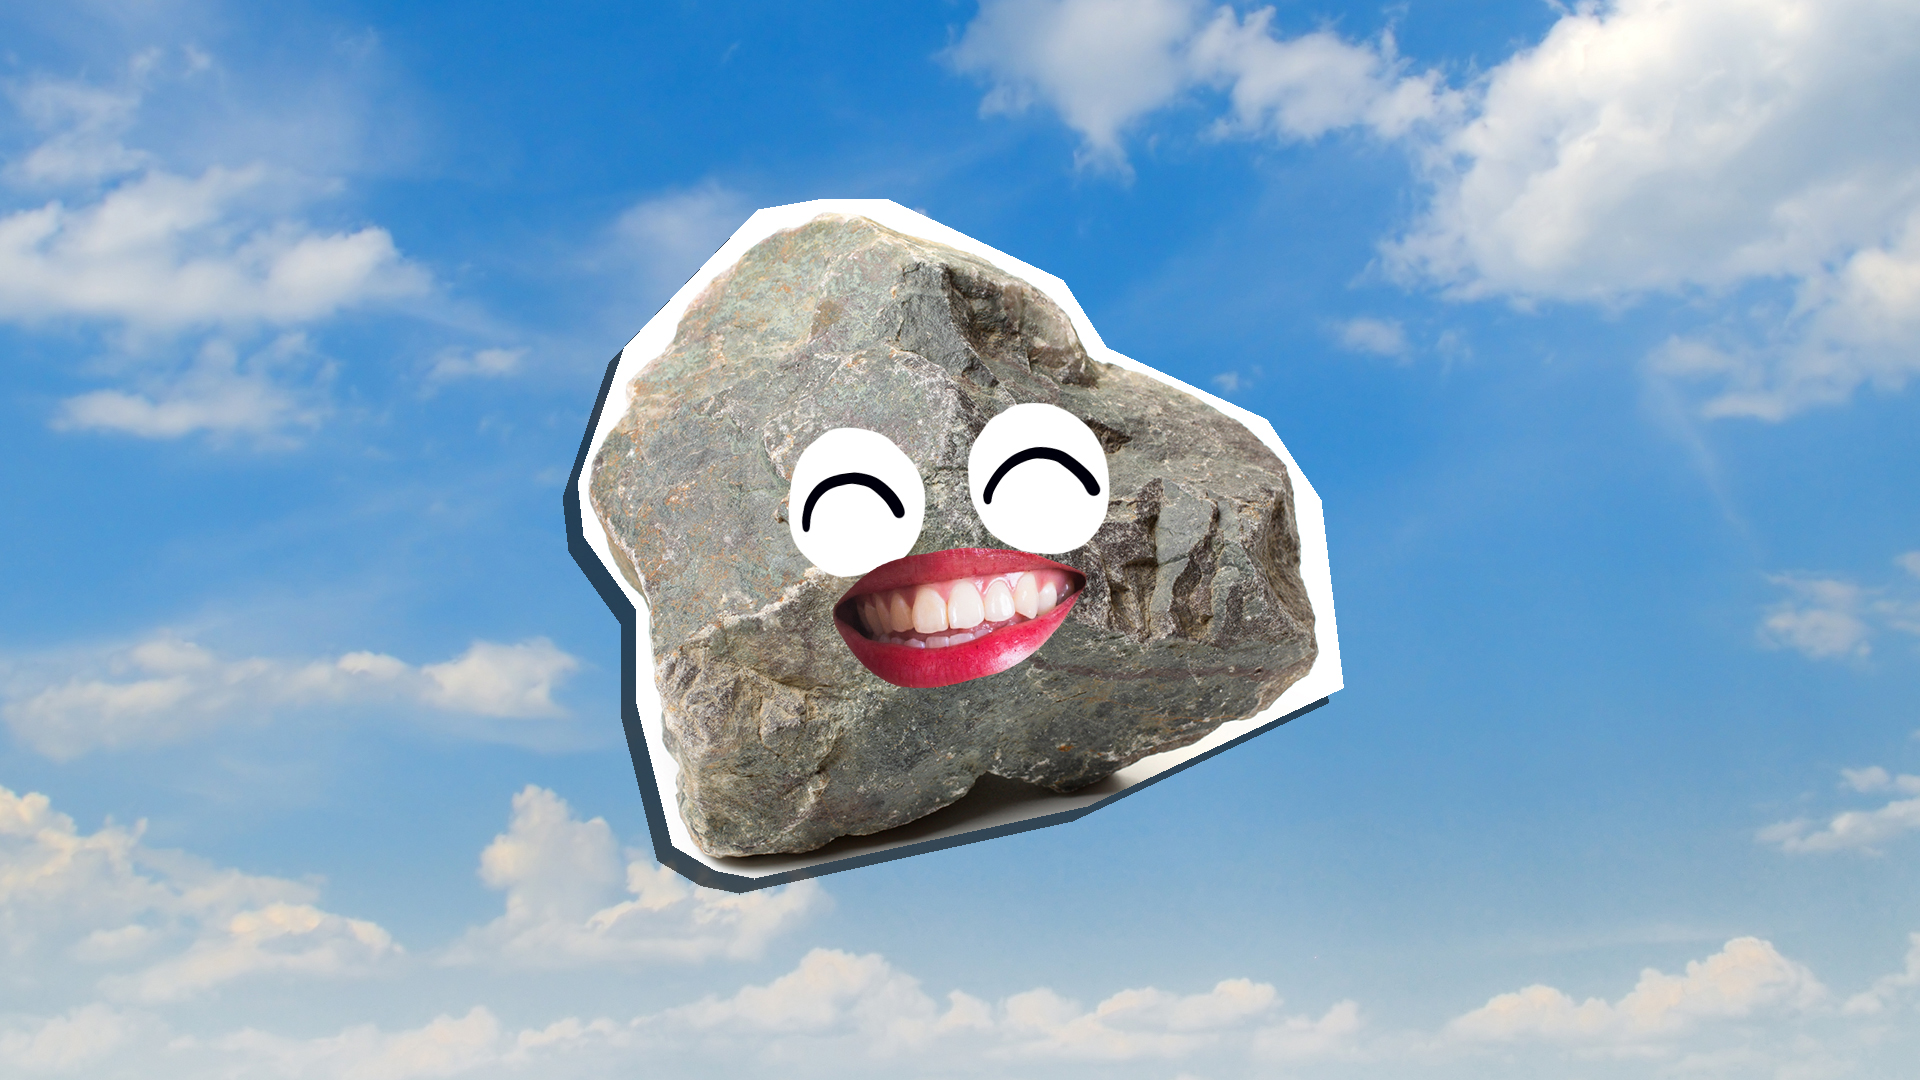 Stone rock